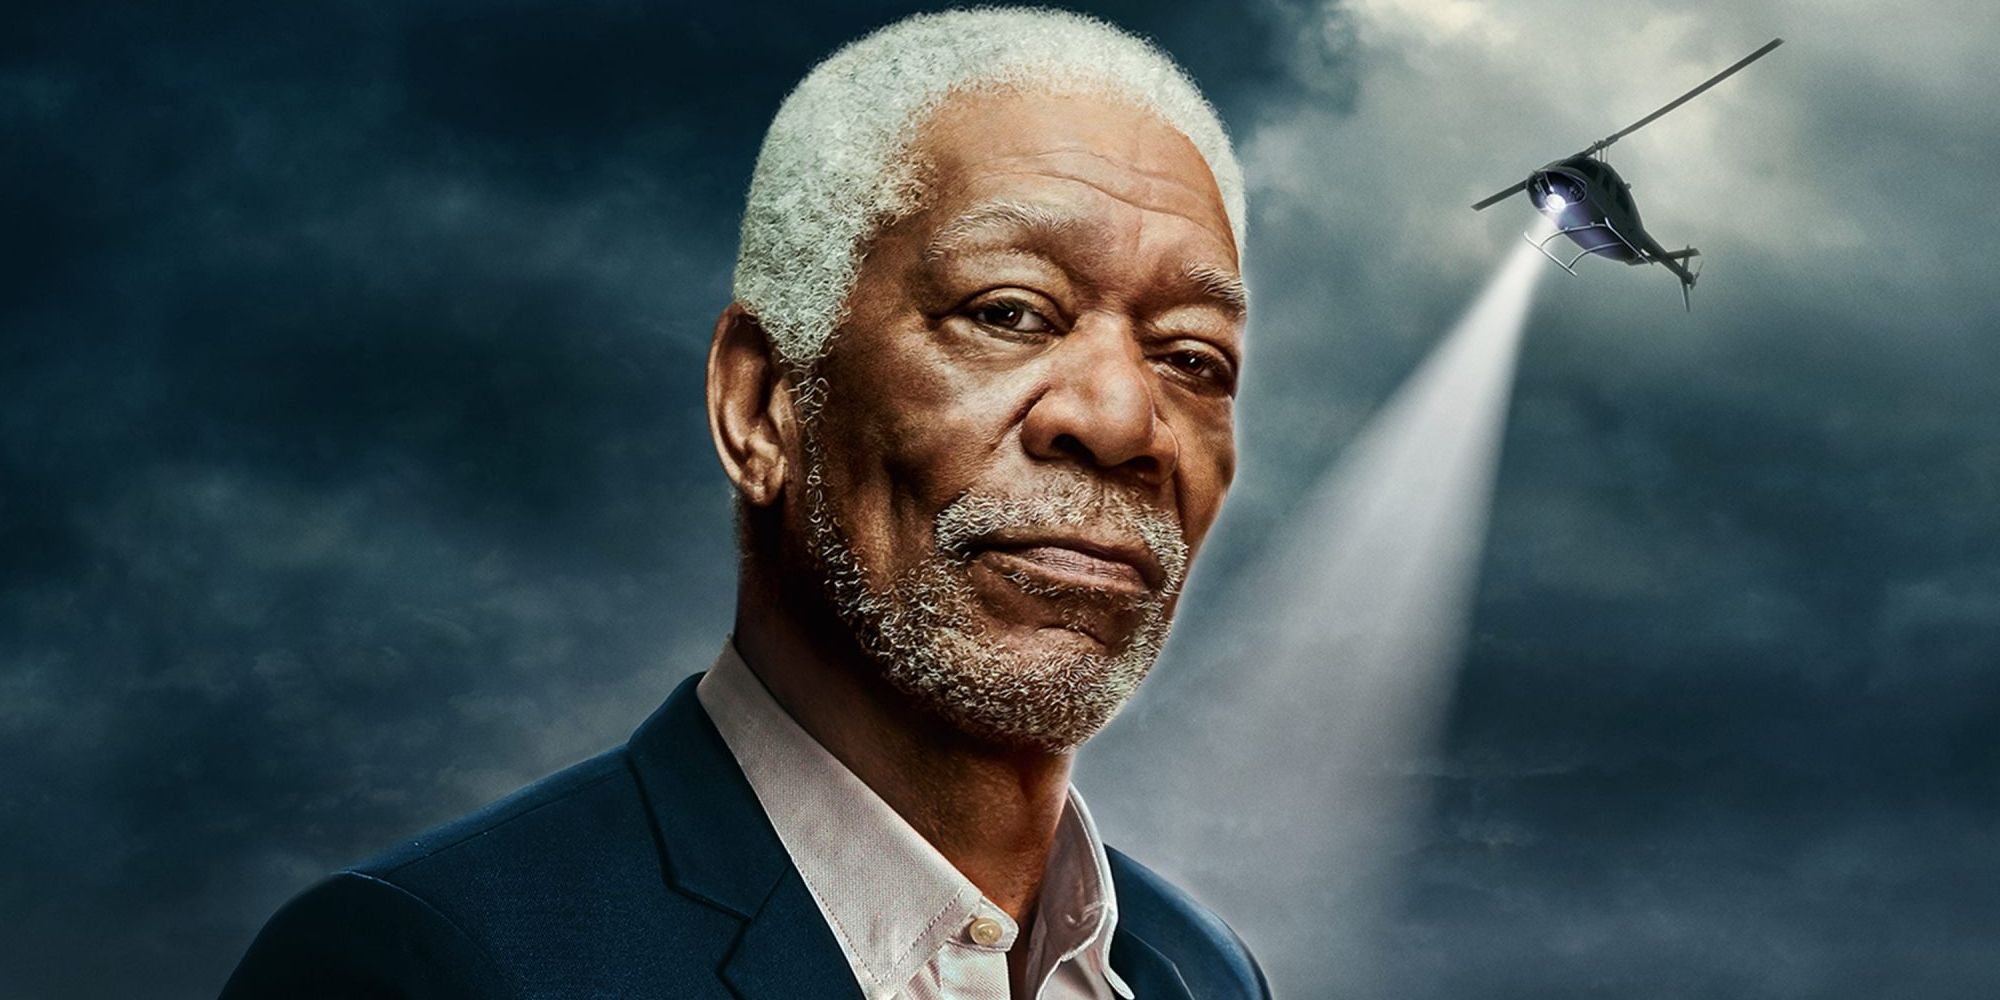 Morgan Freeman denounces “unauthorized” AI imitations of his voice